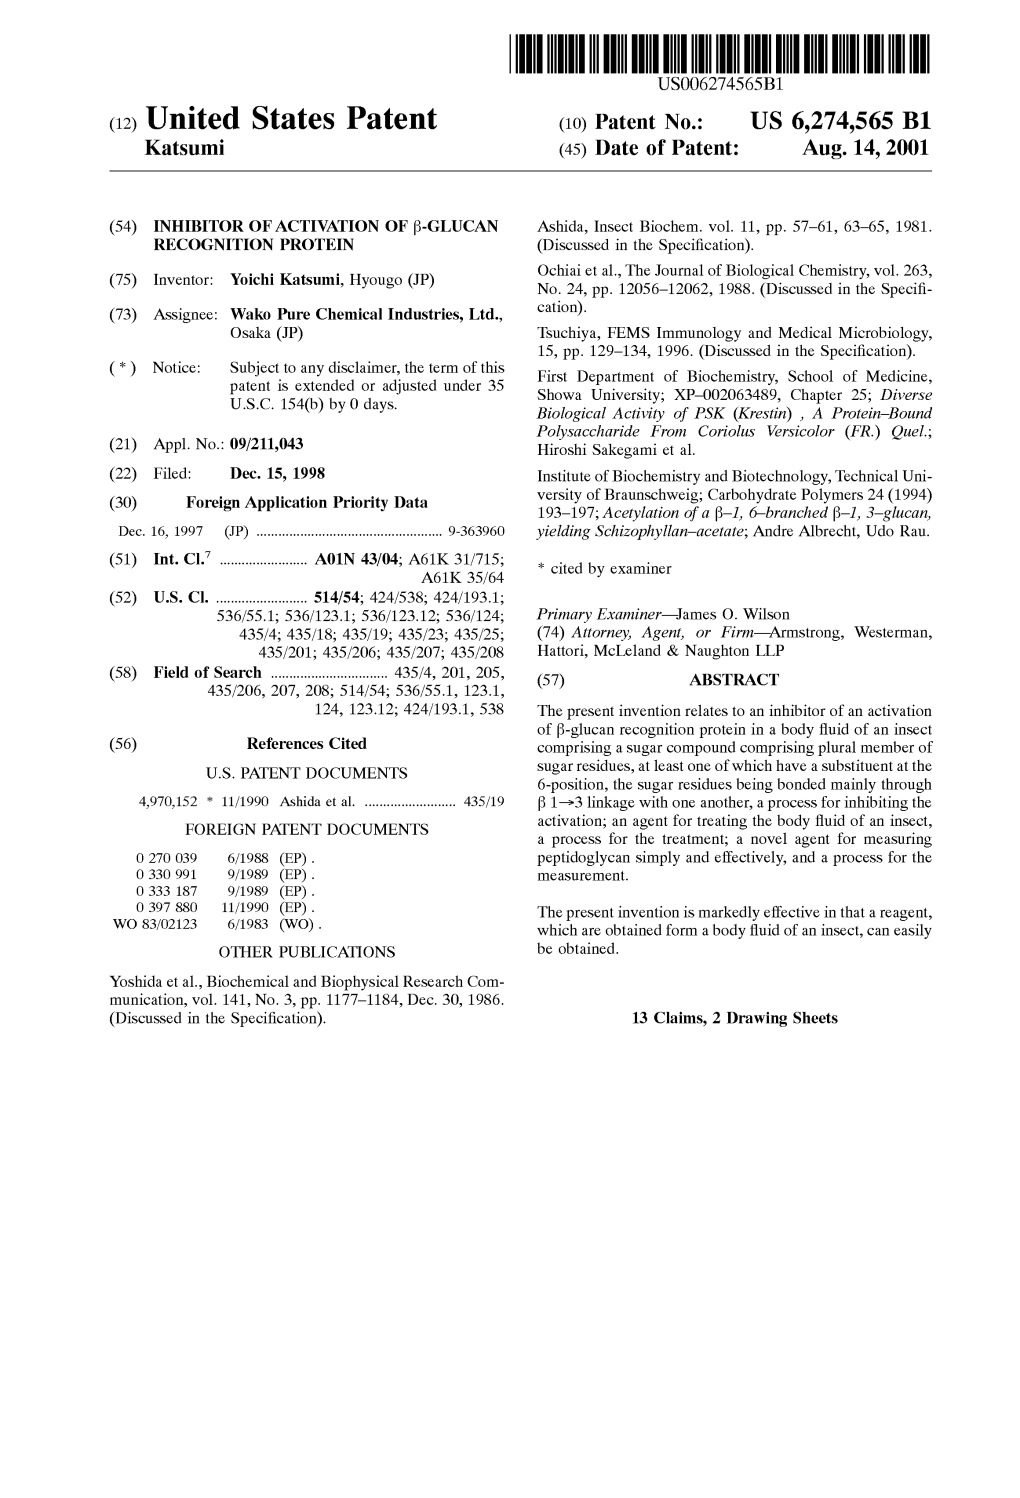 (12) United States Patent (10) Patent No.: US 6,274,565 B1 Katsumi (45) Date of Patent: Aug